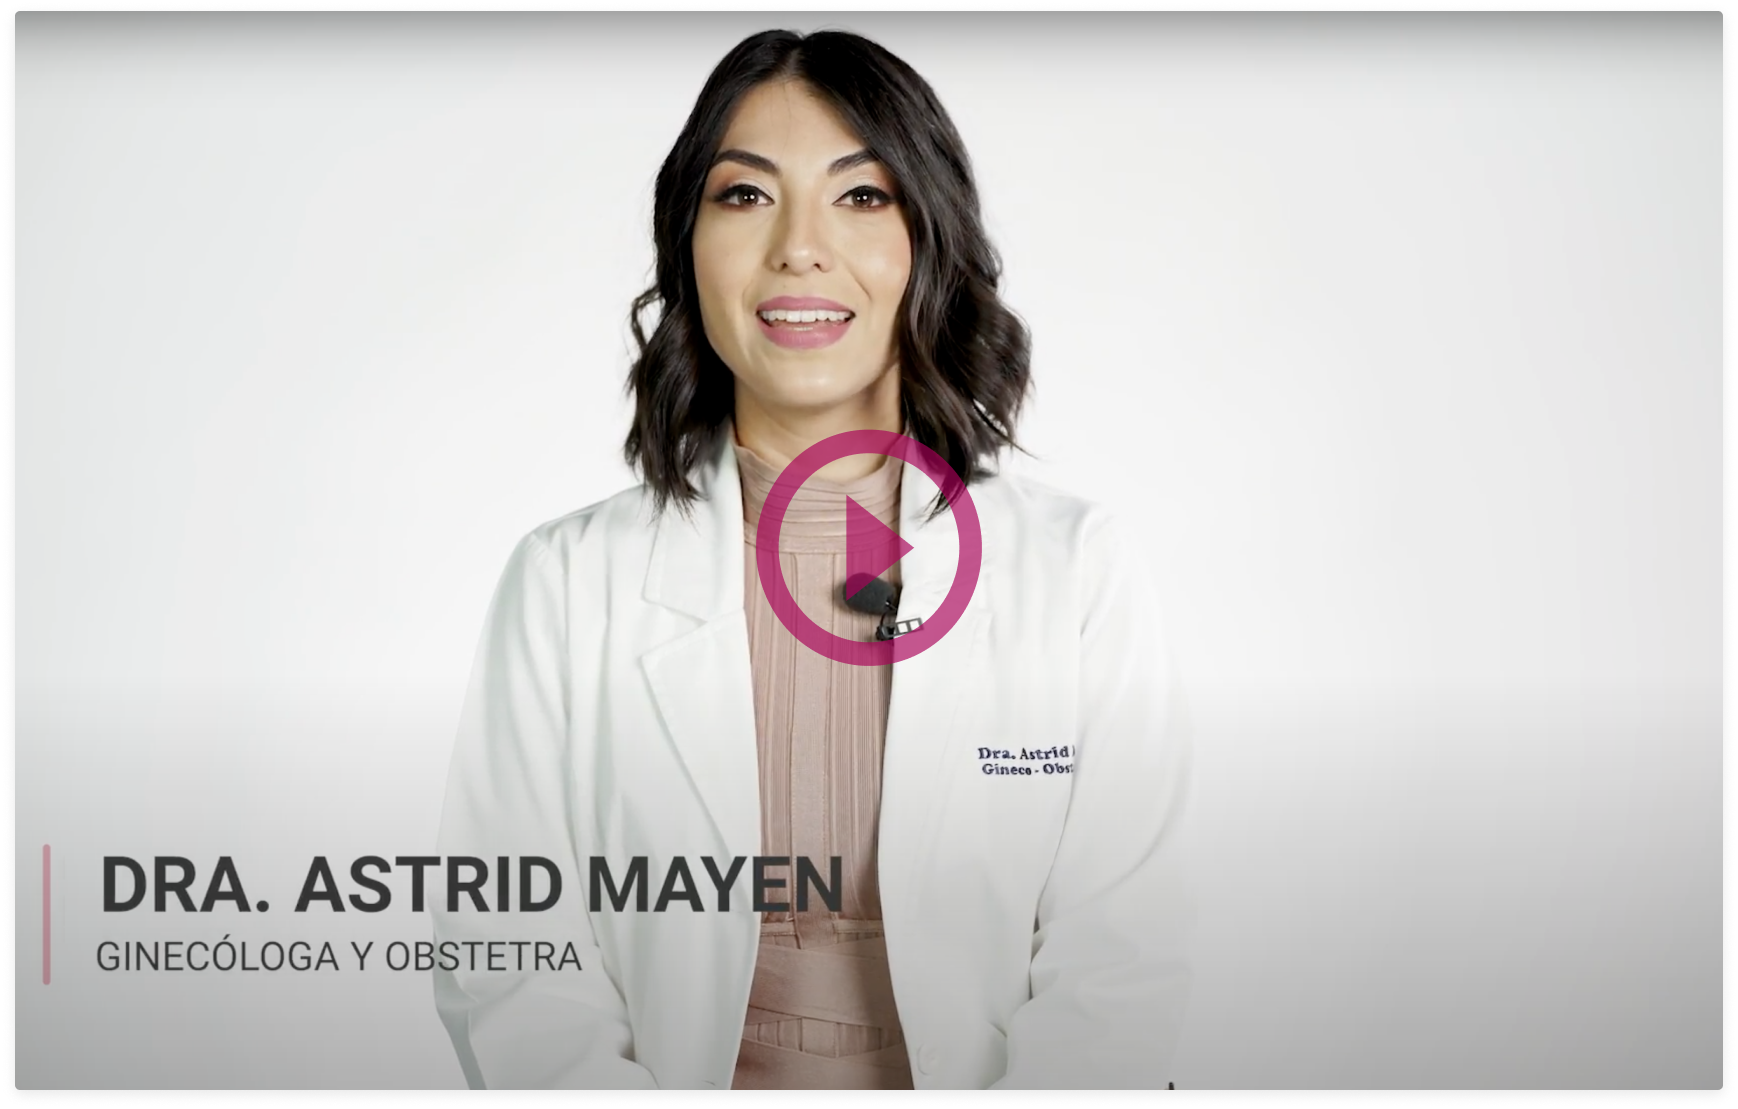 Dra. Astrid Mayen - Ginecologa